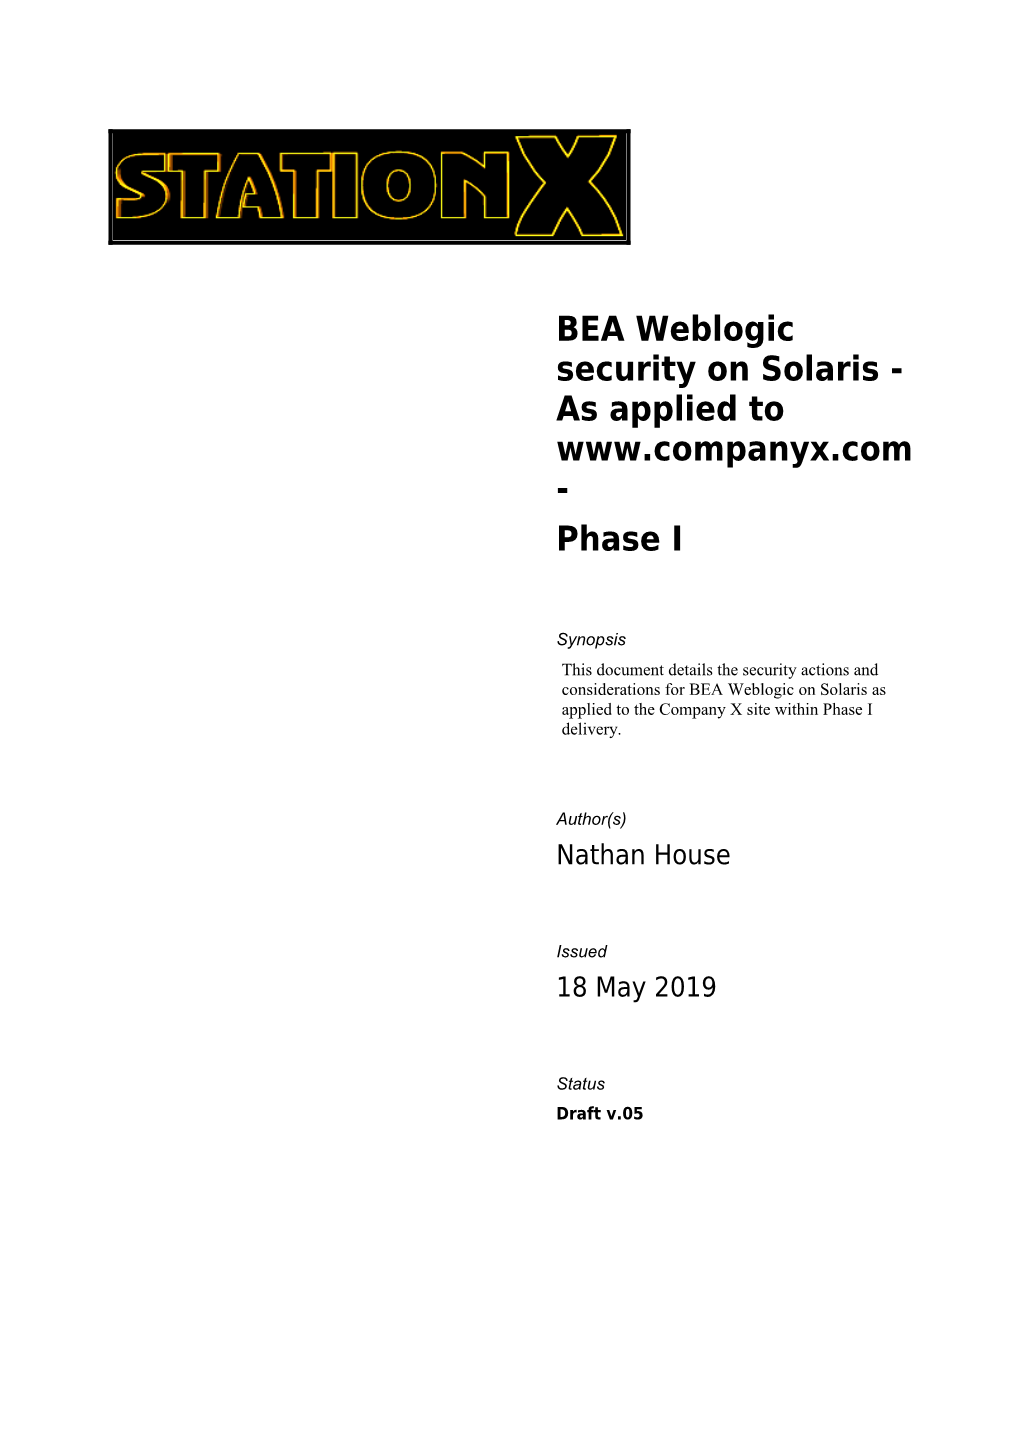 BEA Weblogic Security on Solaris - As Applied to